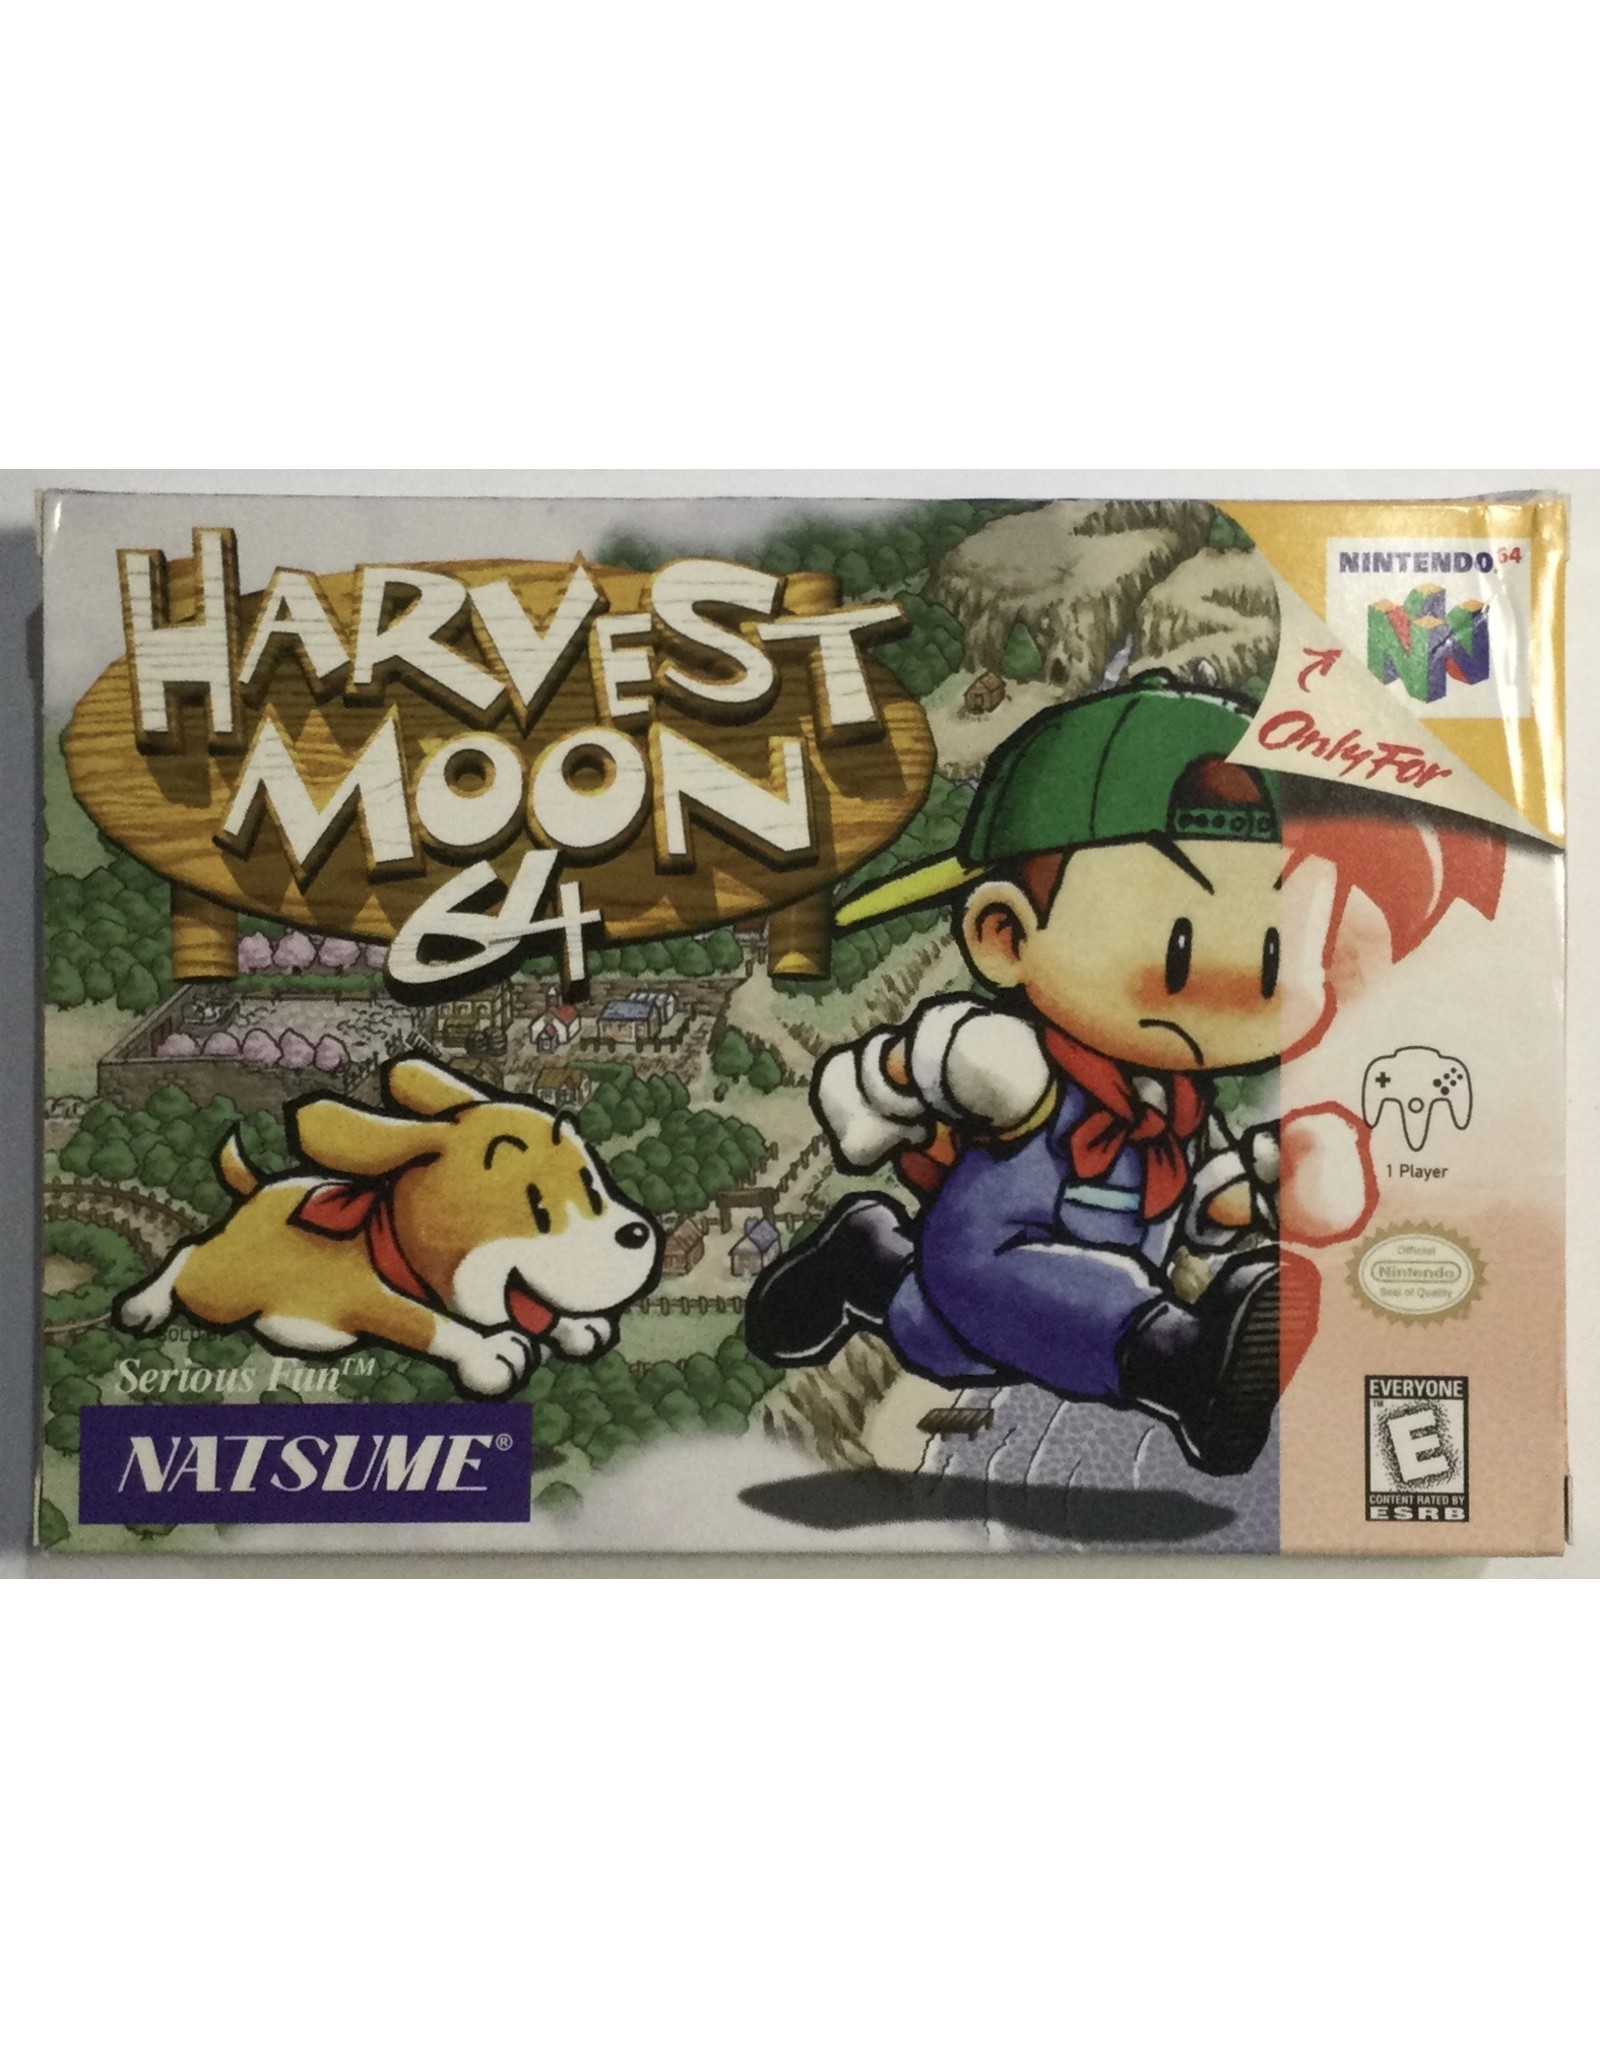 NATSUME Harvest Moon 64 for Nintendo 64 (N64) - CIB